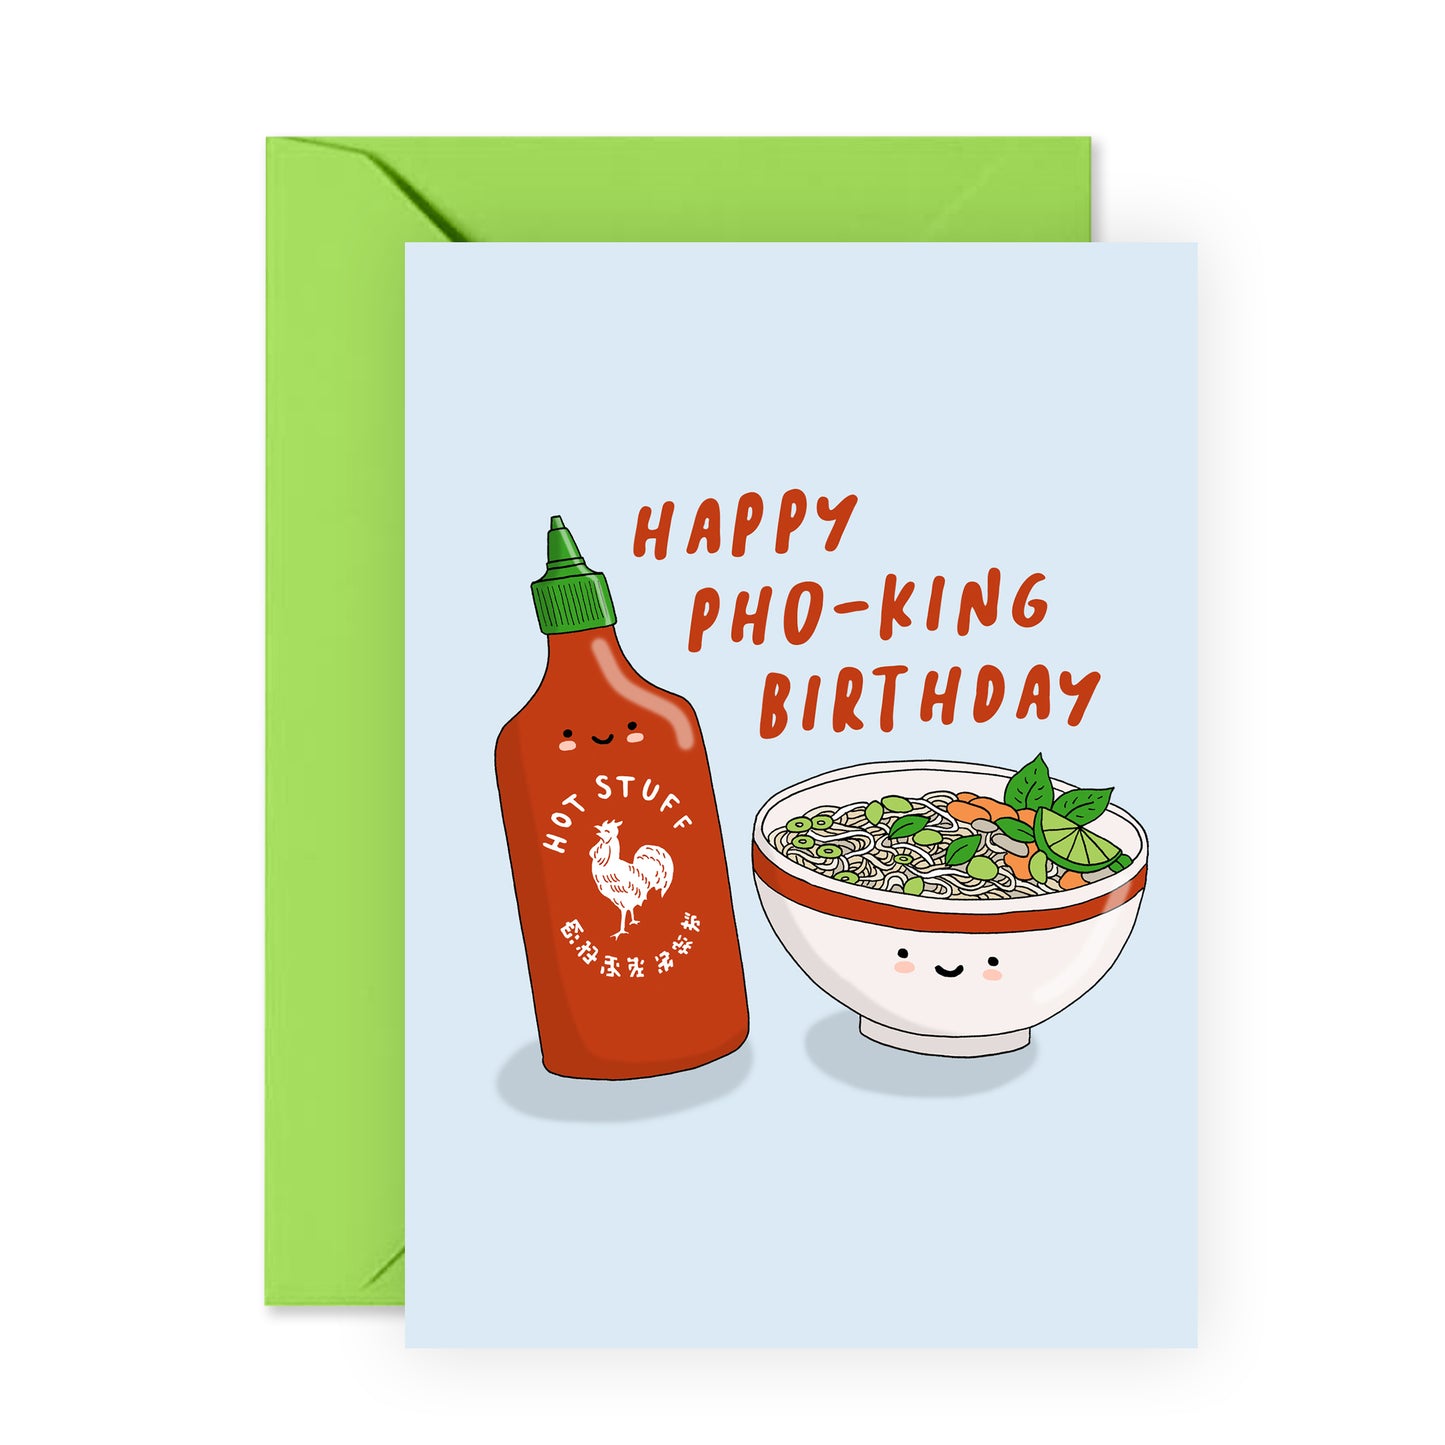 Funny Birthday Card - Happy Pho-King Birthday - For Men Women Him Her